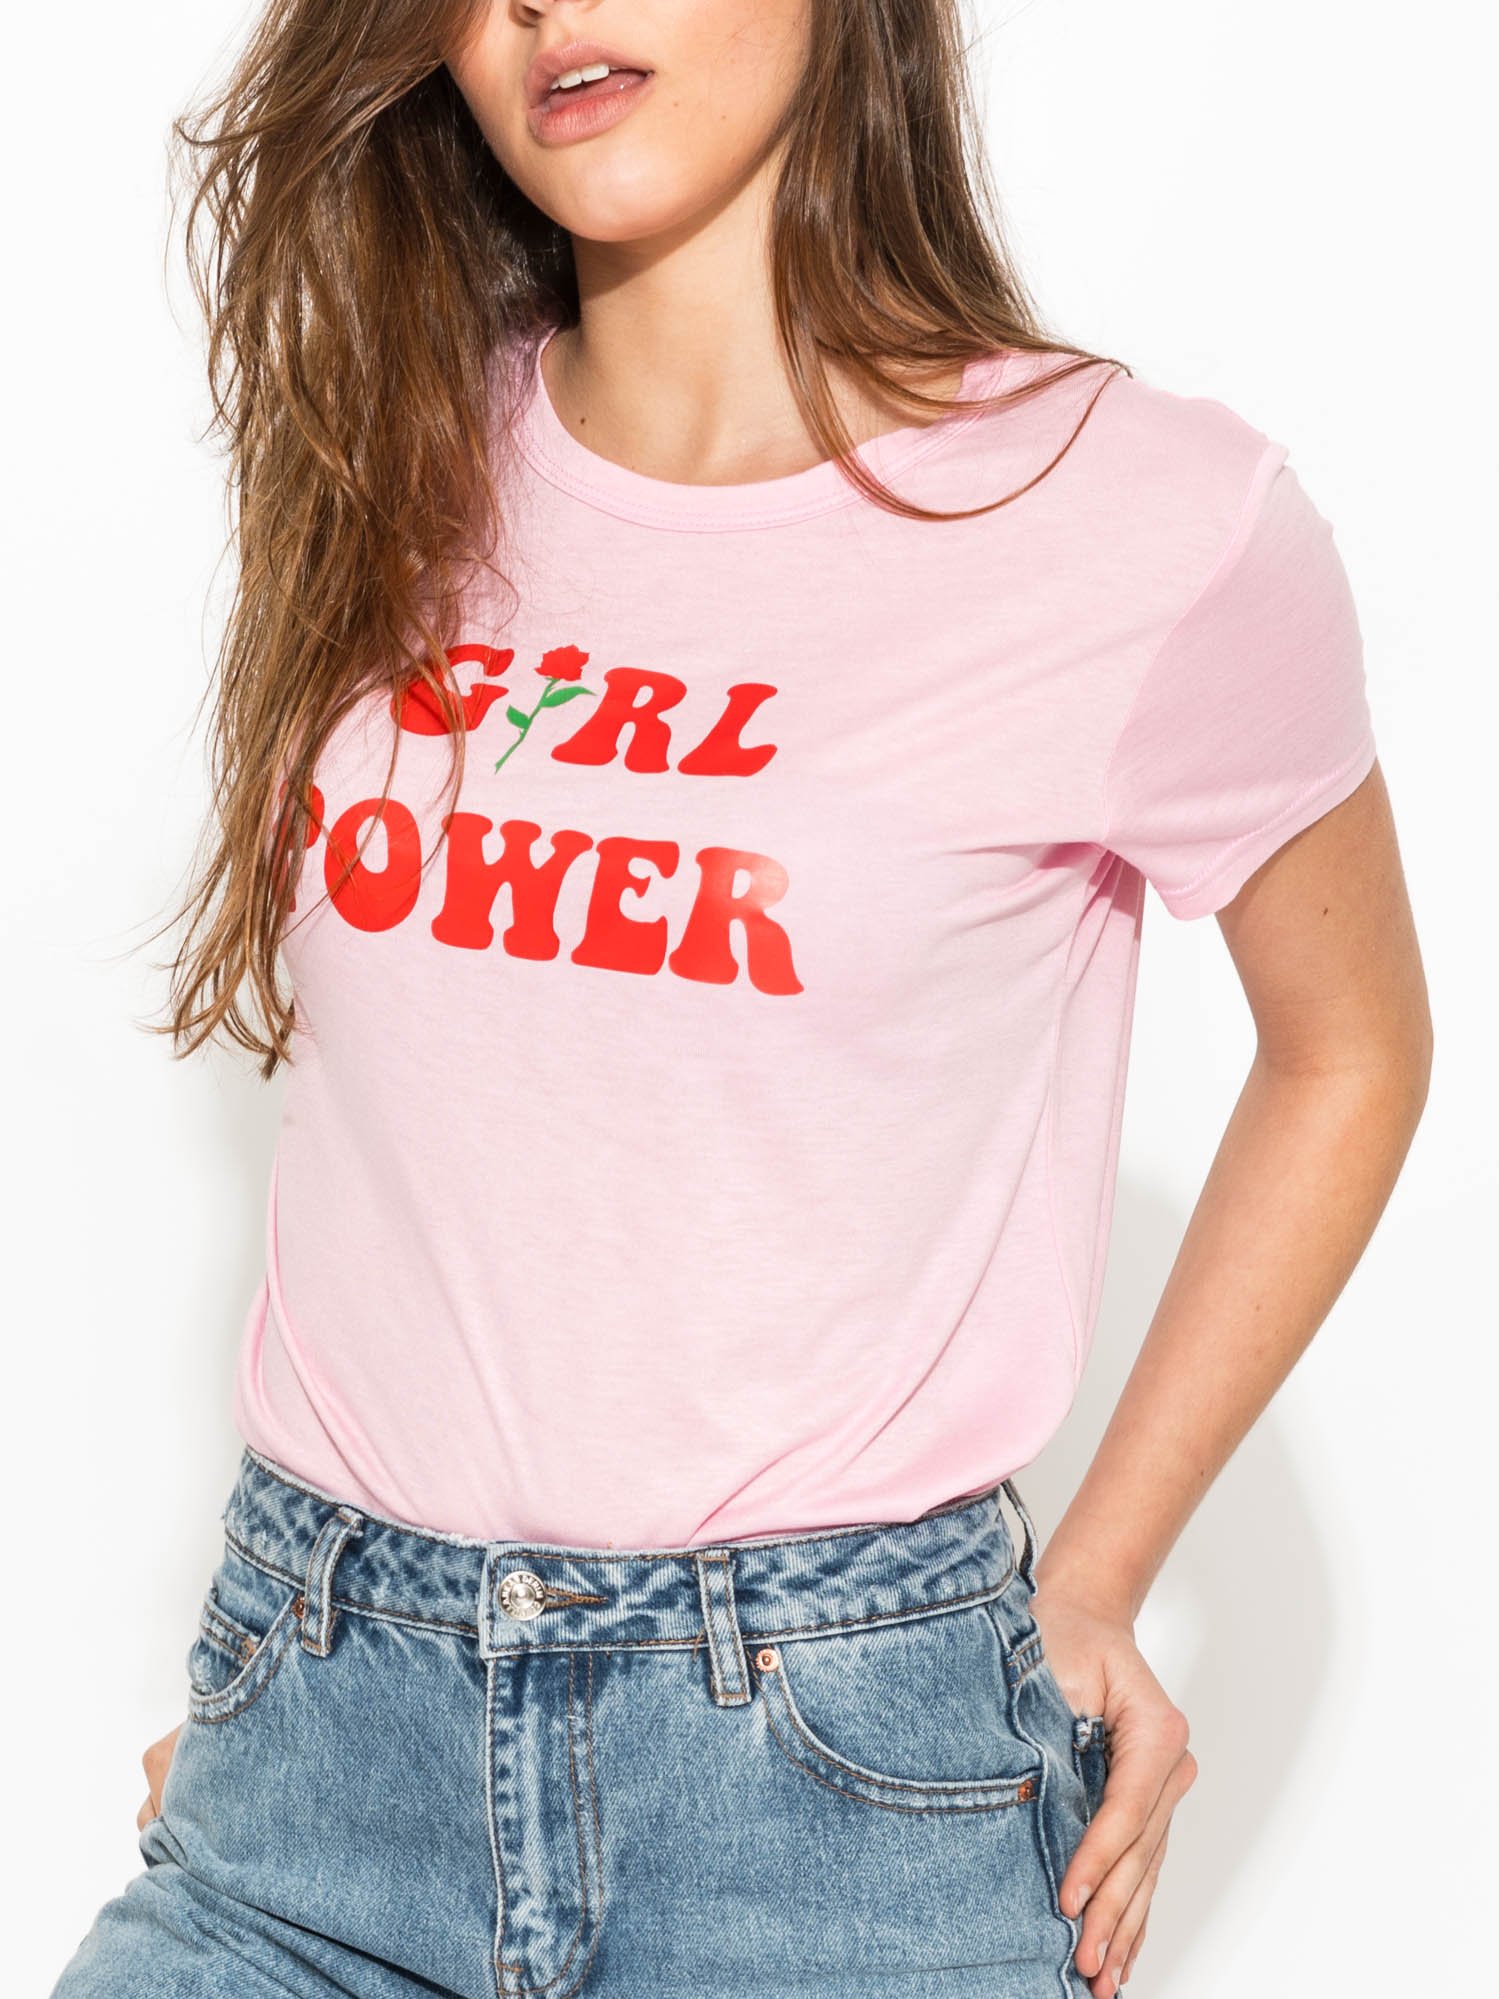 GIRL POWER T-SHIRT TOP WOMENS TUMBLR FUNNY SLOGAN CUTE FEMINIST ...